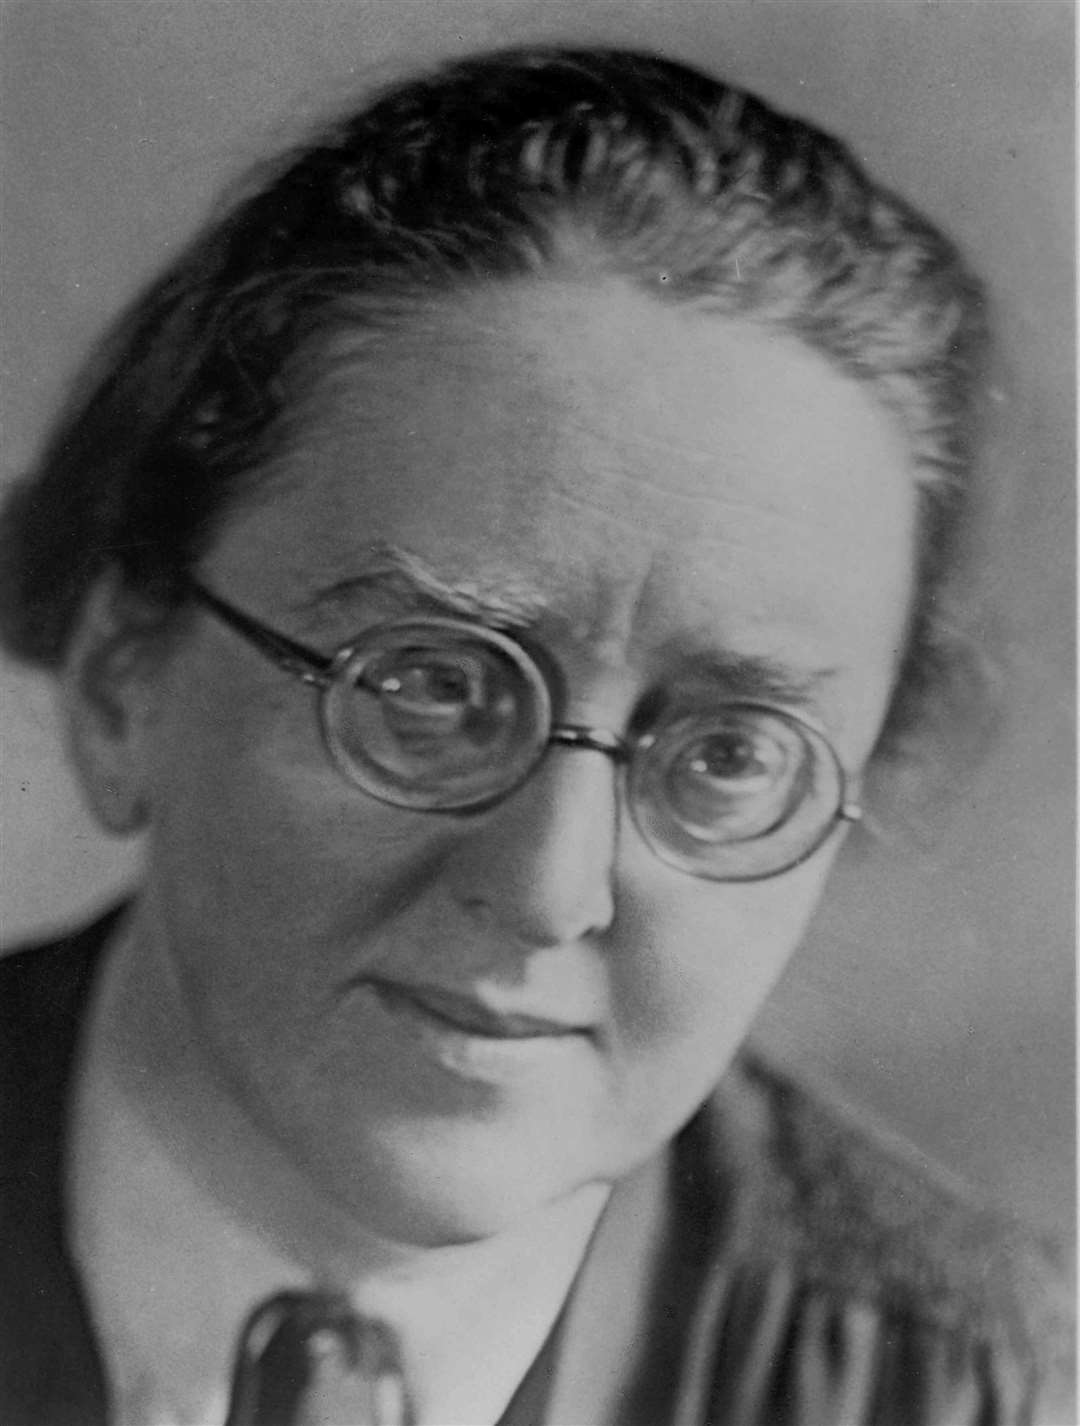 Anna Essinger saved many Jewish children